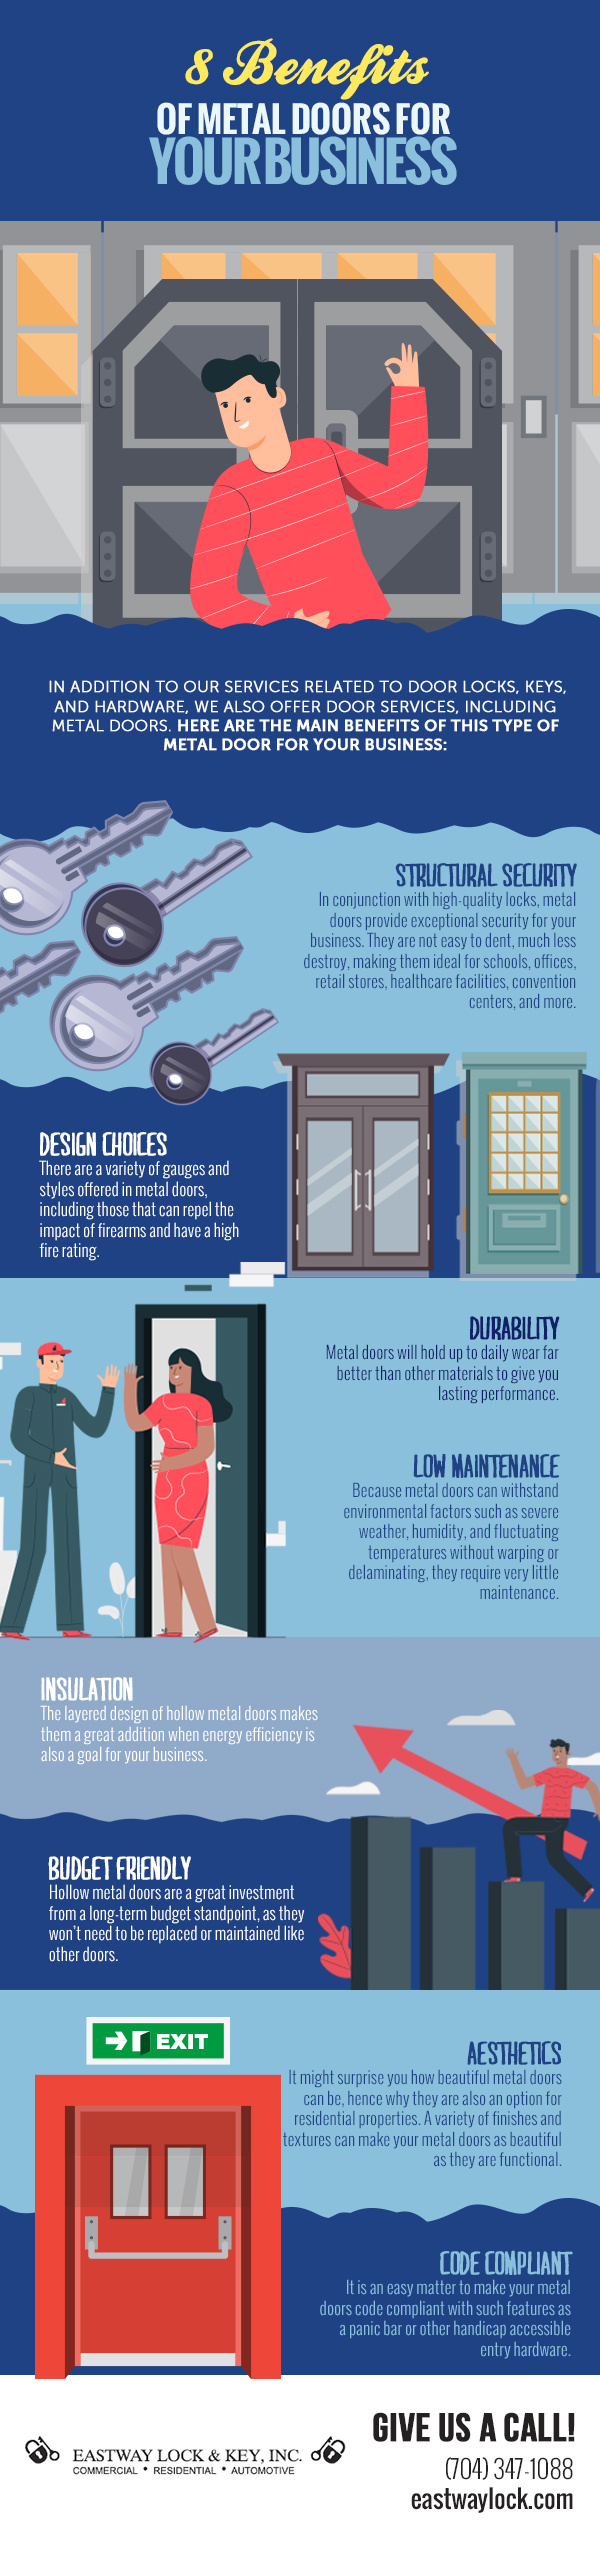 8 Benefits of Metal Doors for Your Business [infographic]